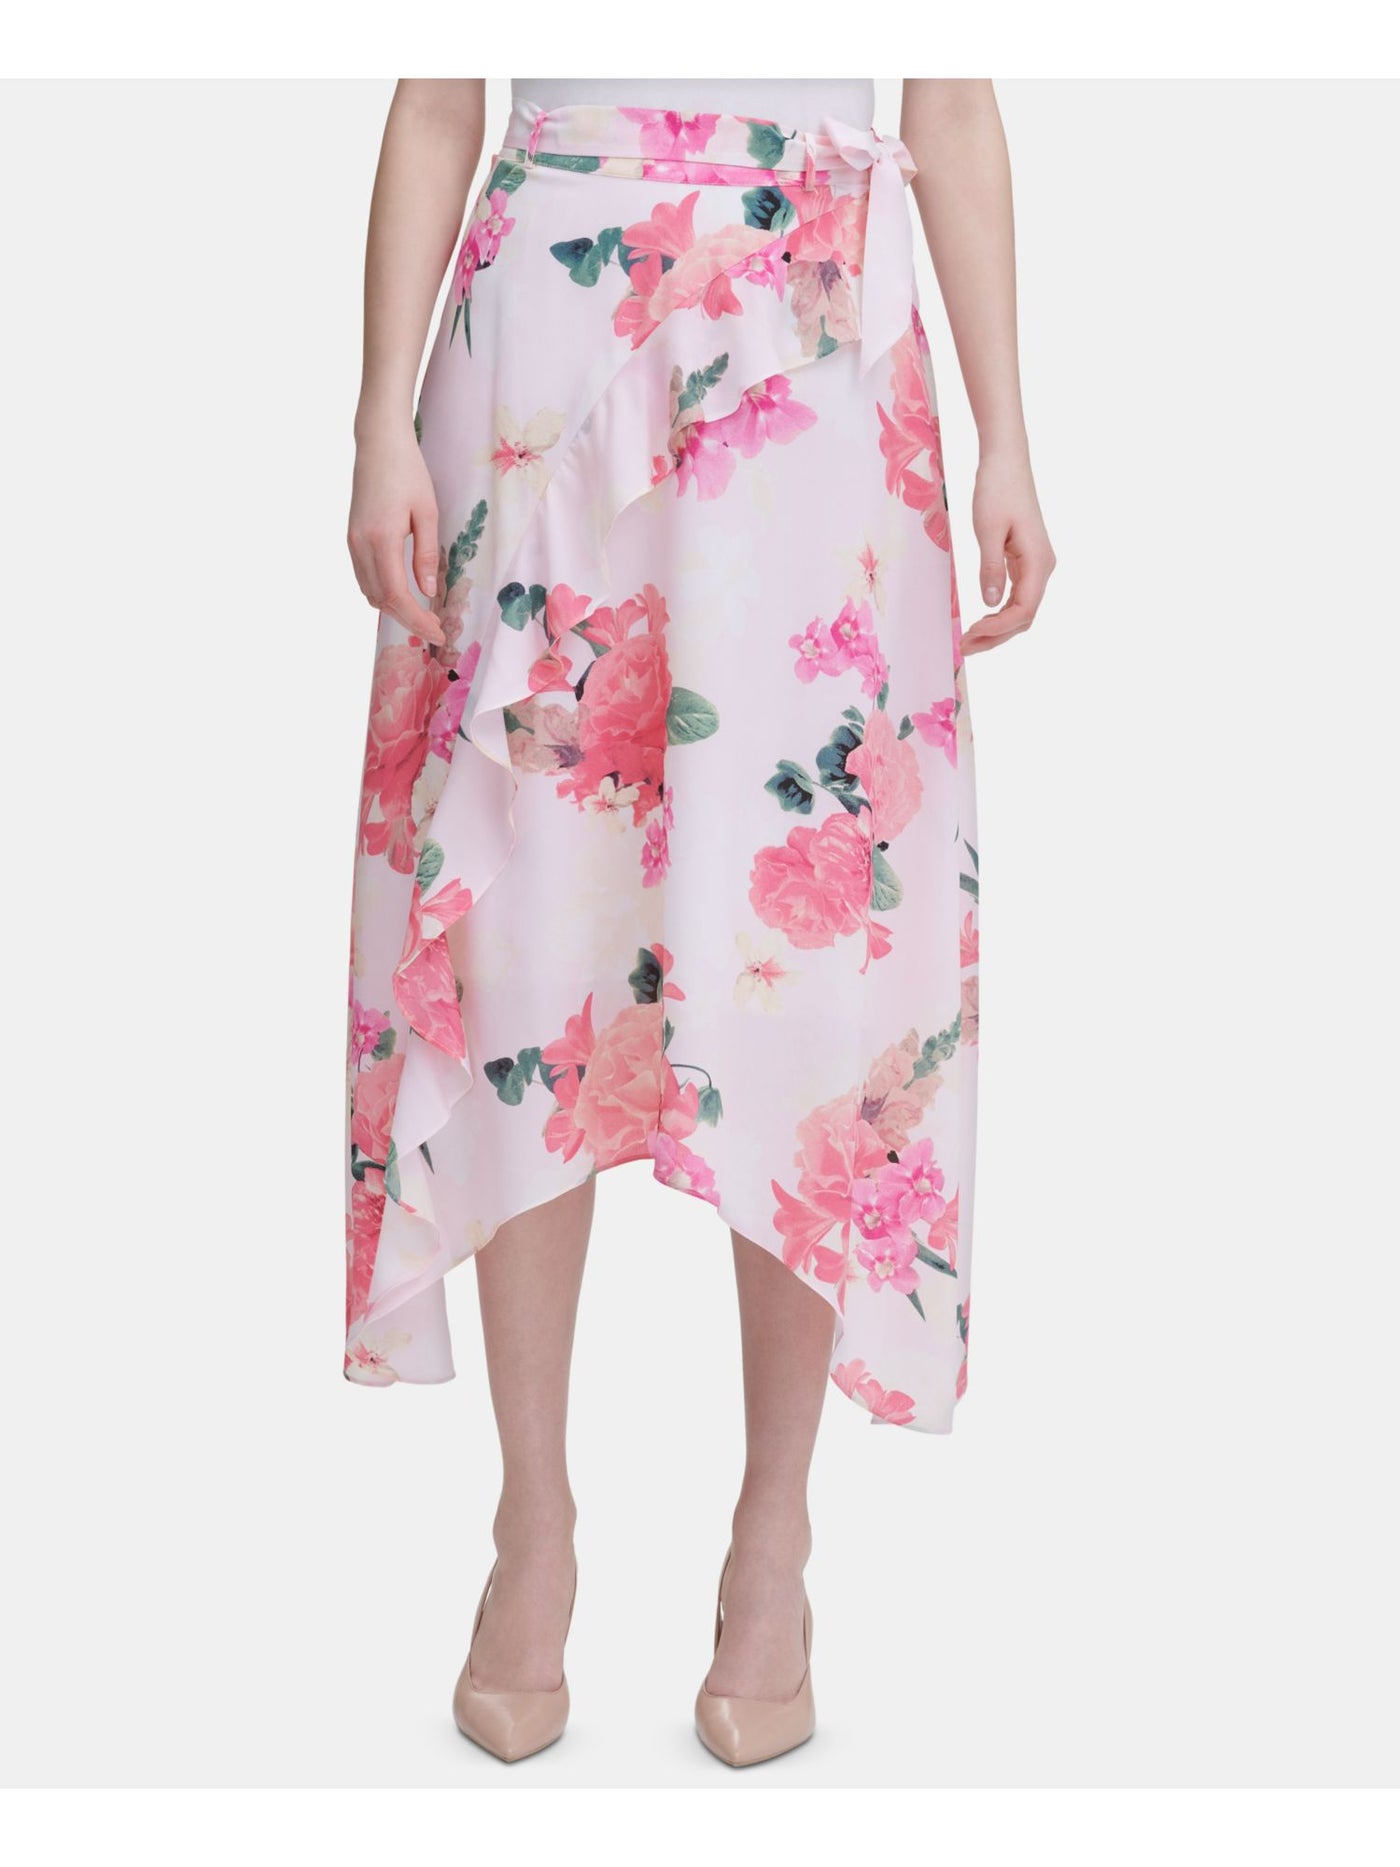 CALVIN KLEIN Womens Pink Floral Layered Skirt Size: 4